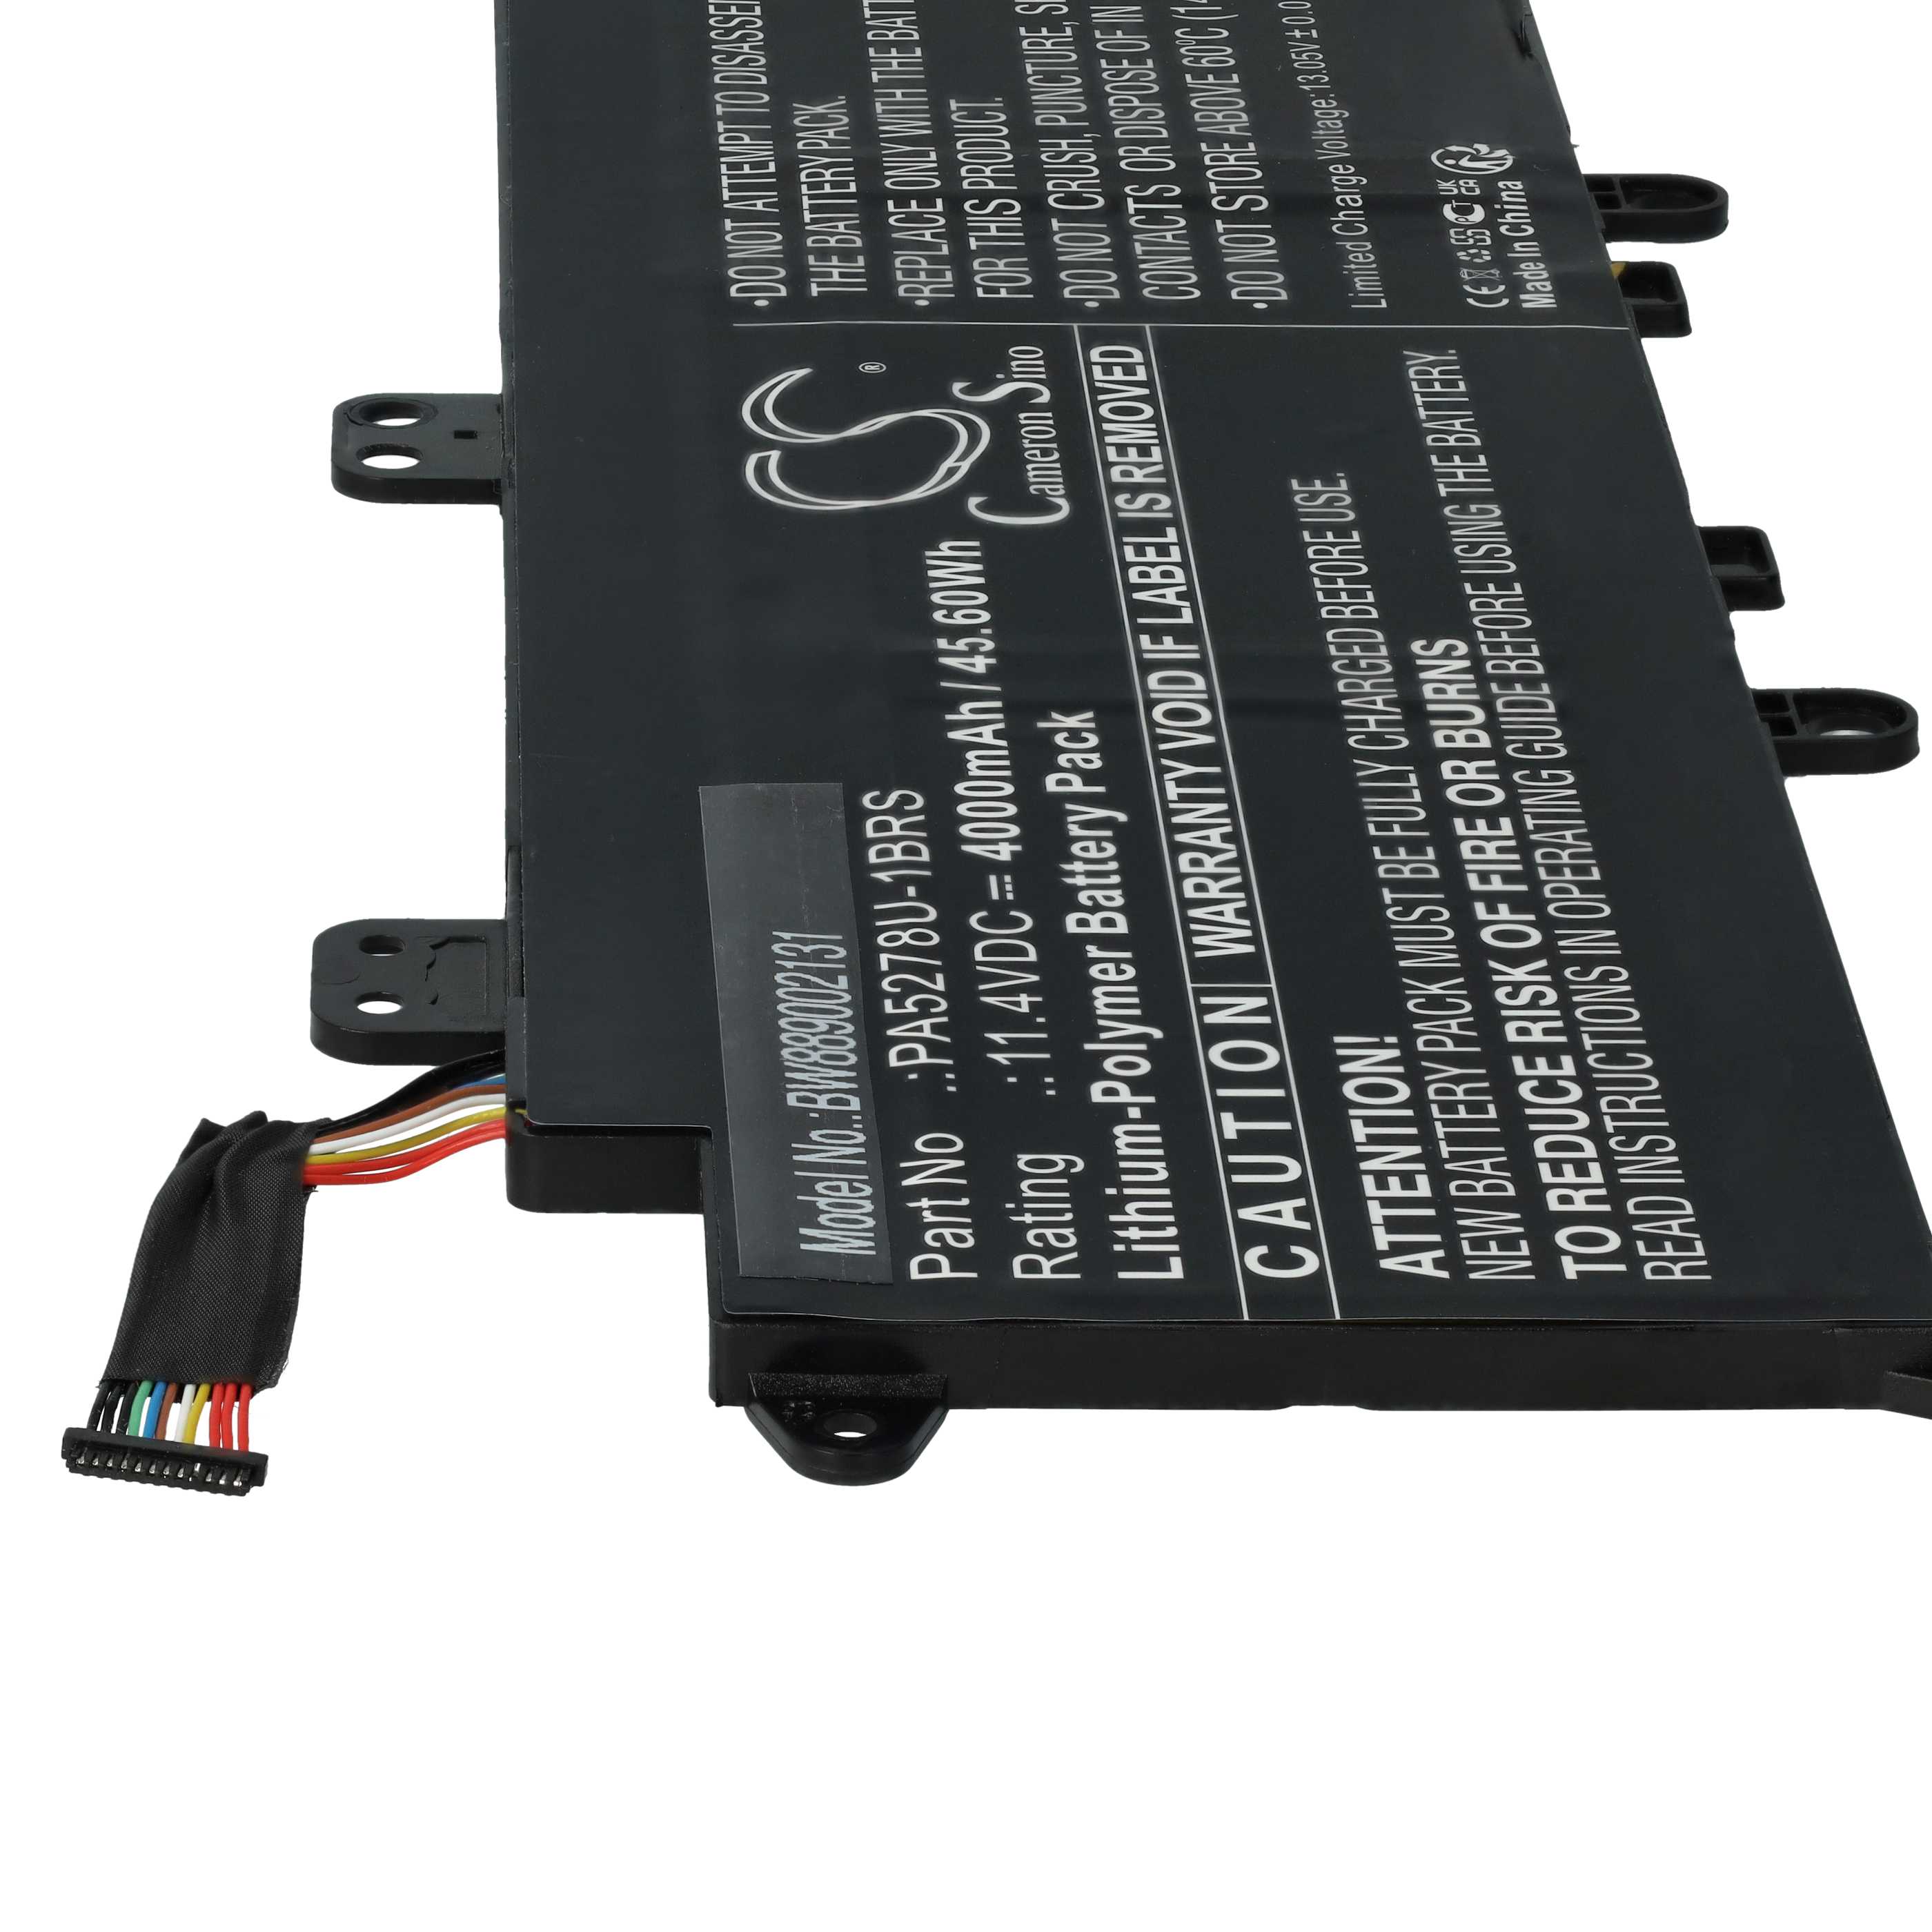 Akumulator do laptopa zamiennik Toshiba PA5278U-1BRS - 4000 mAh 11,4 V LiPo, czarny